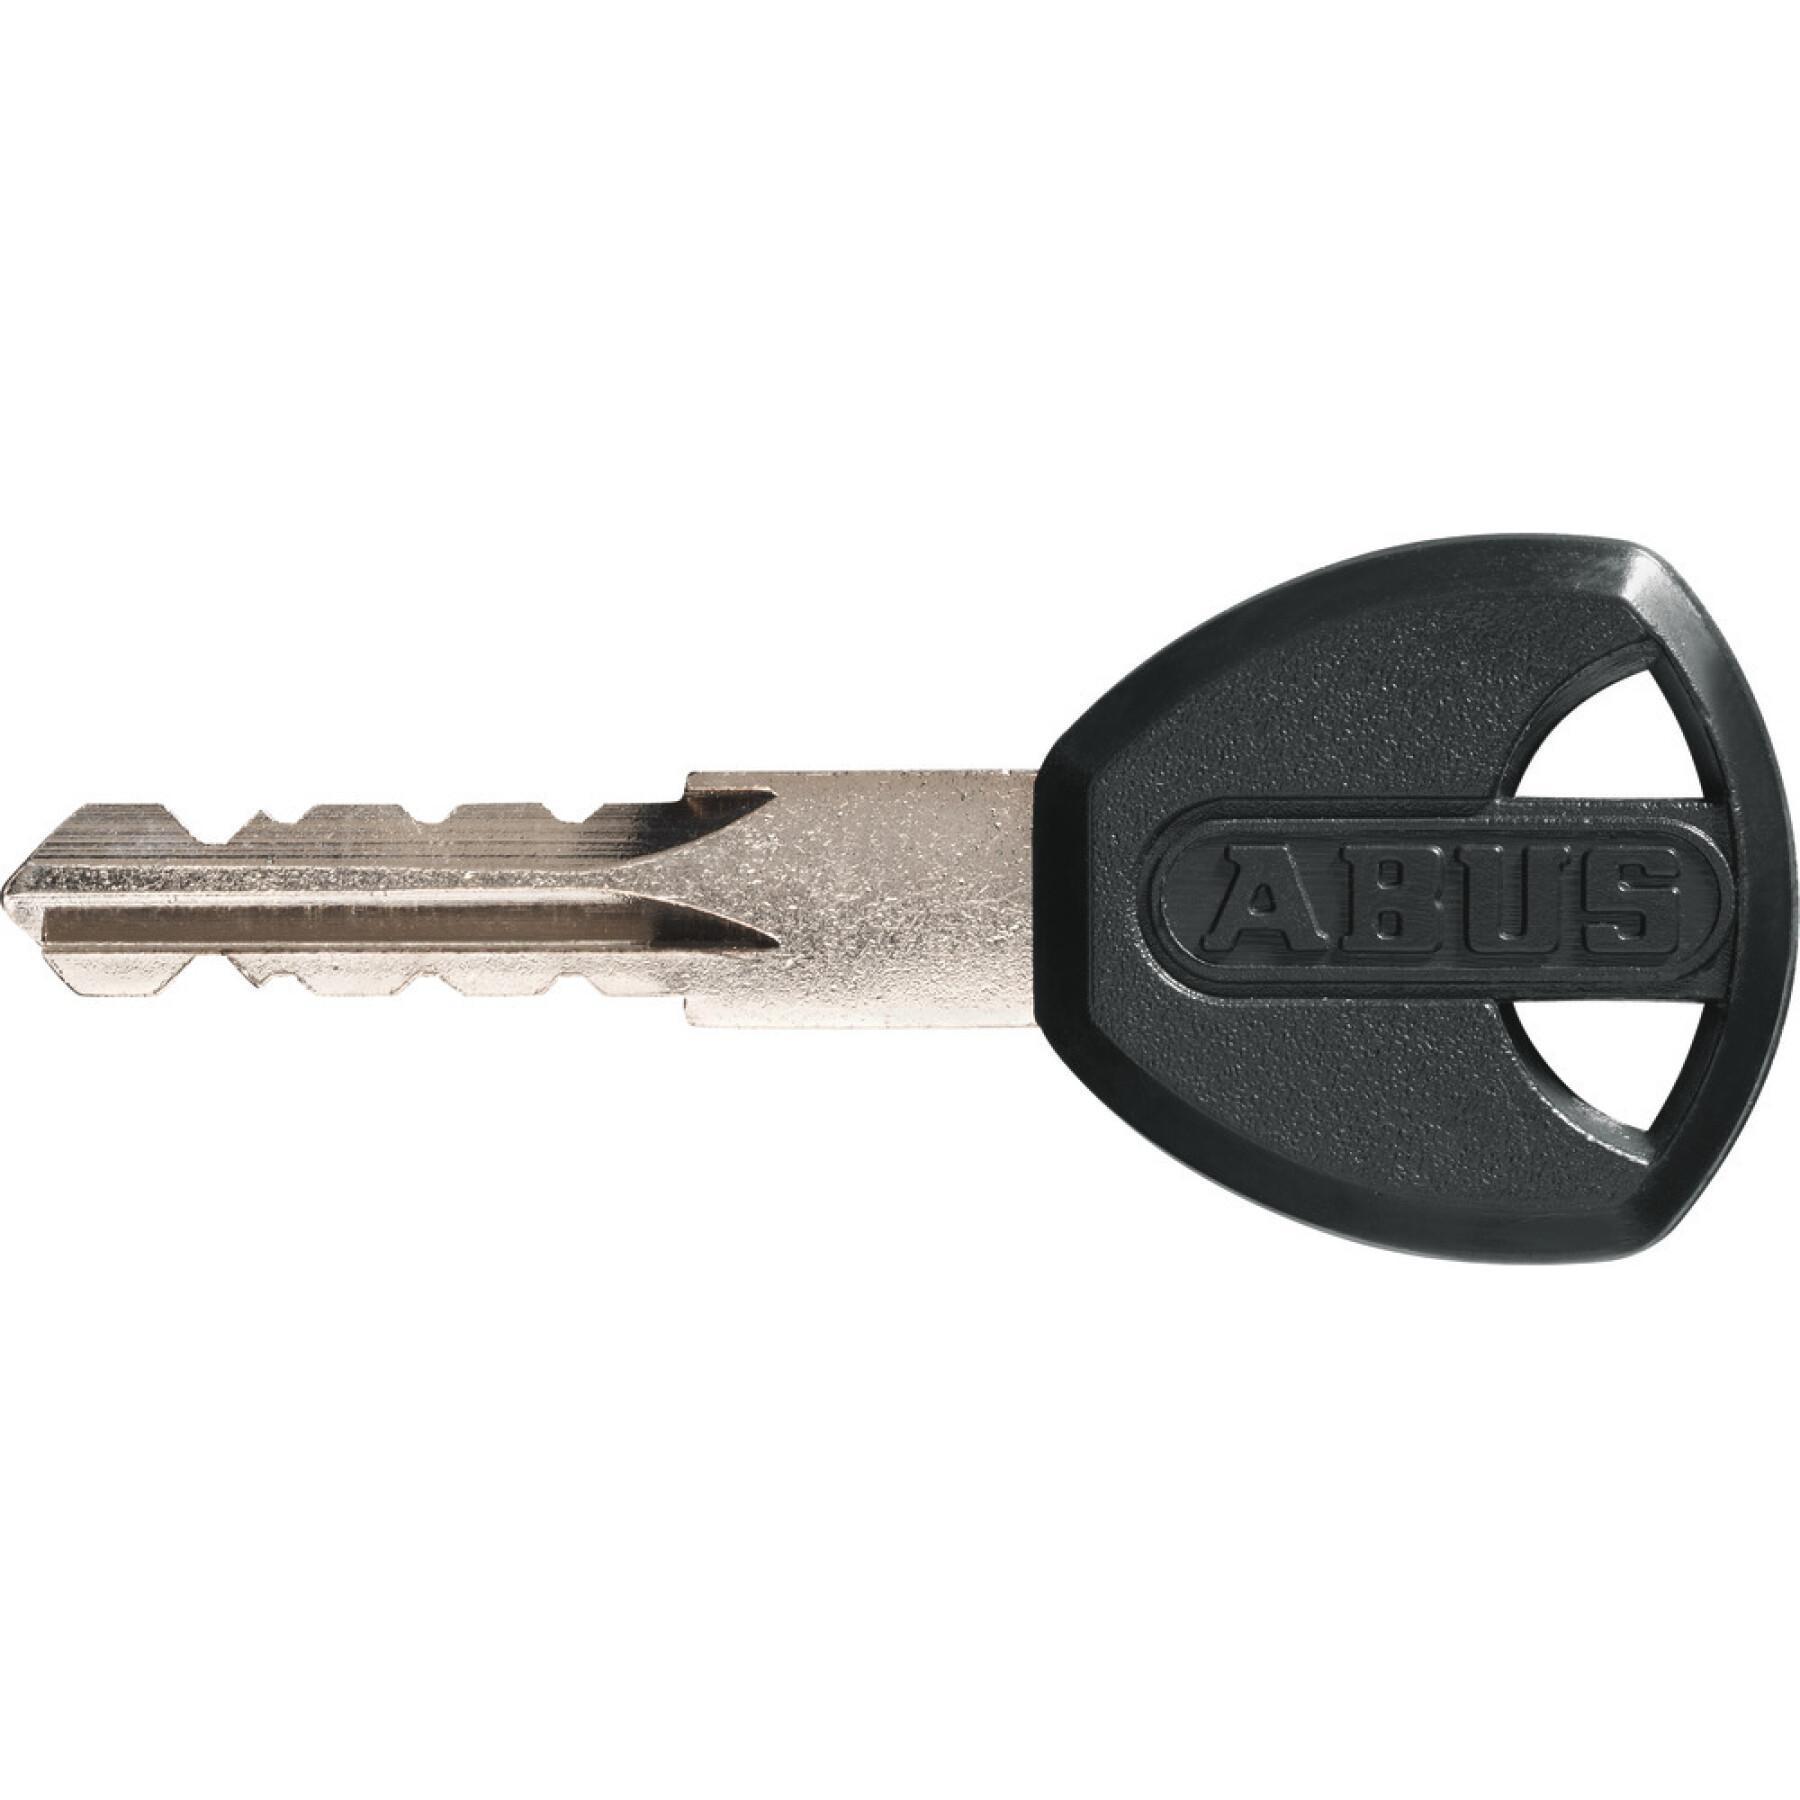 Cable lock Abus 860/85 QS RBU